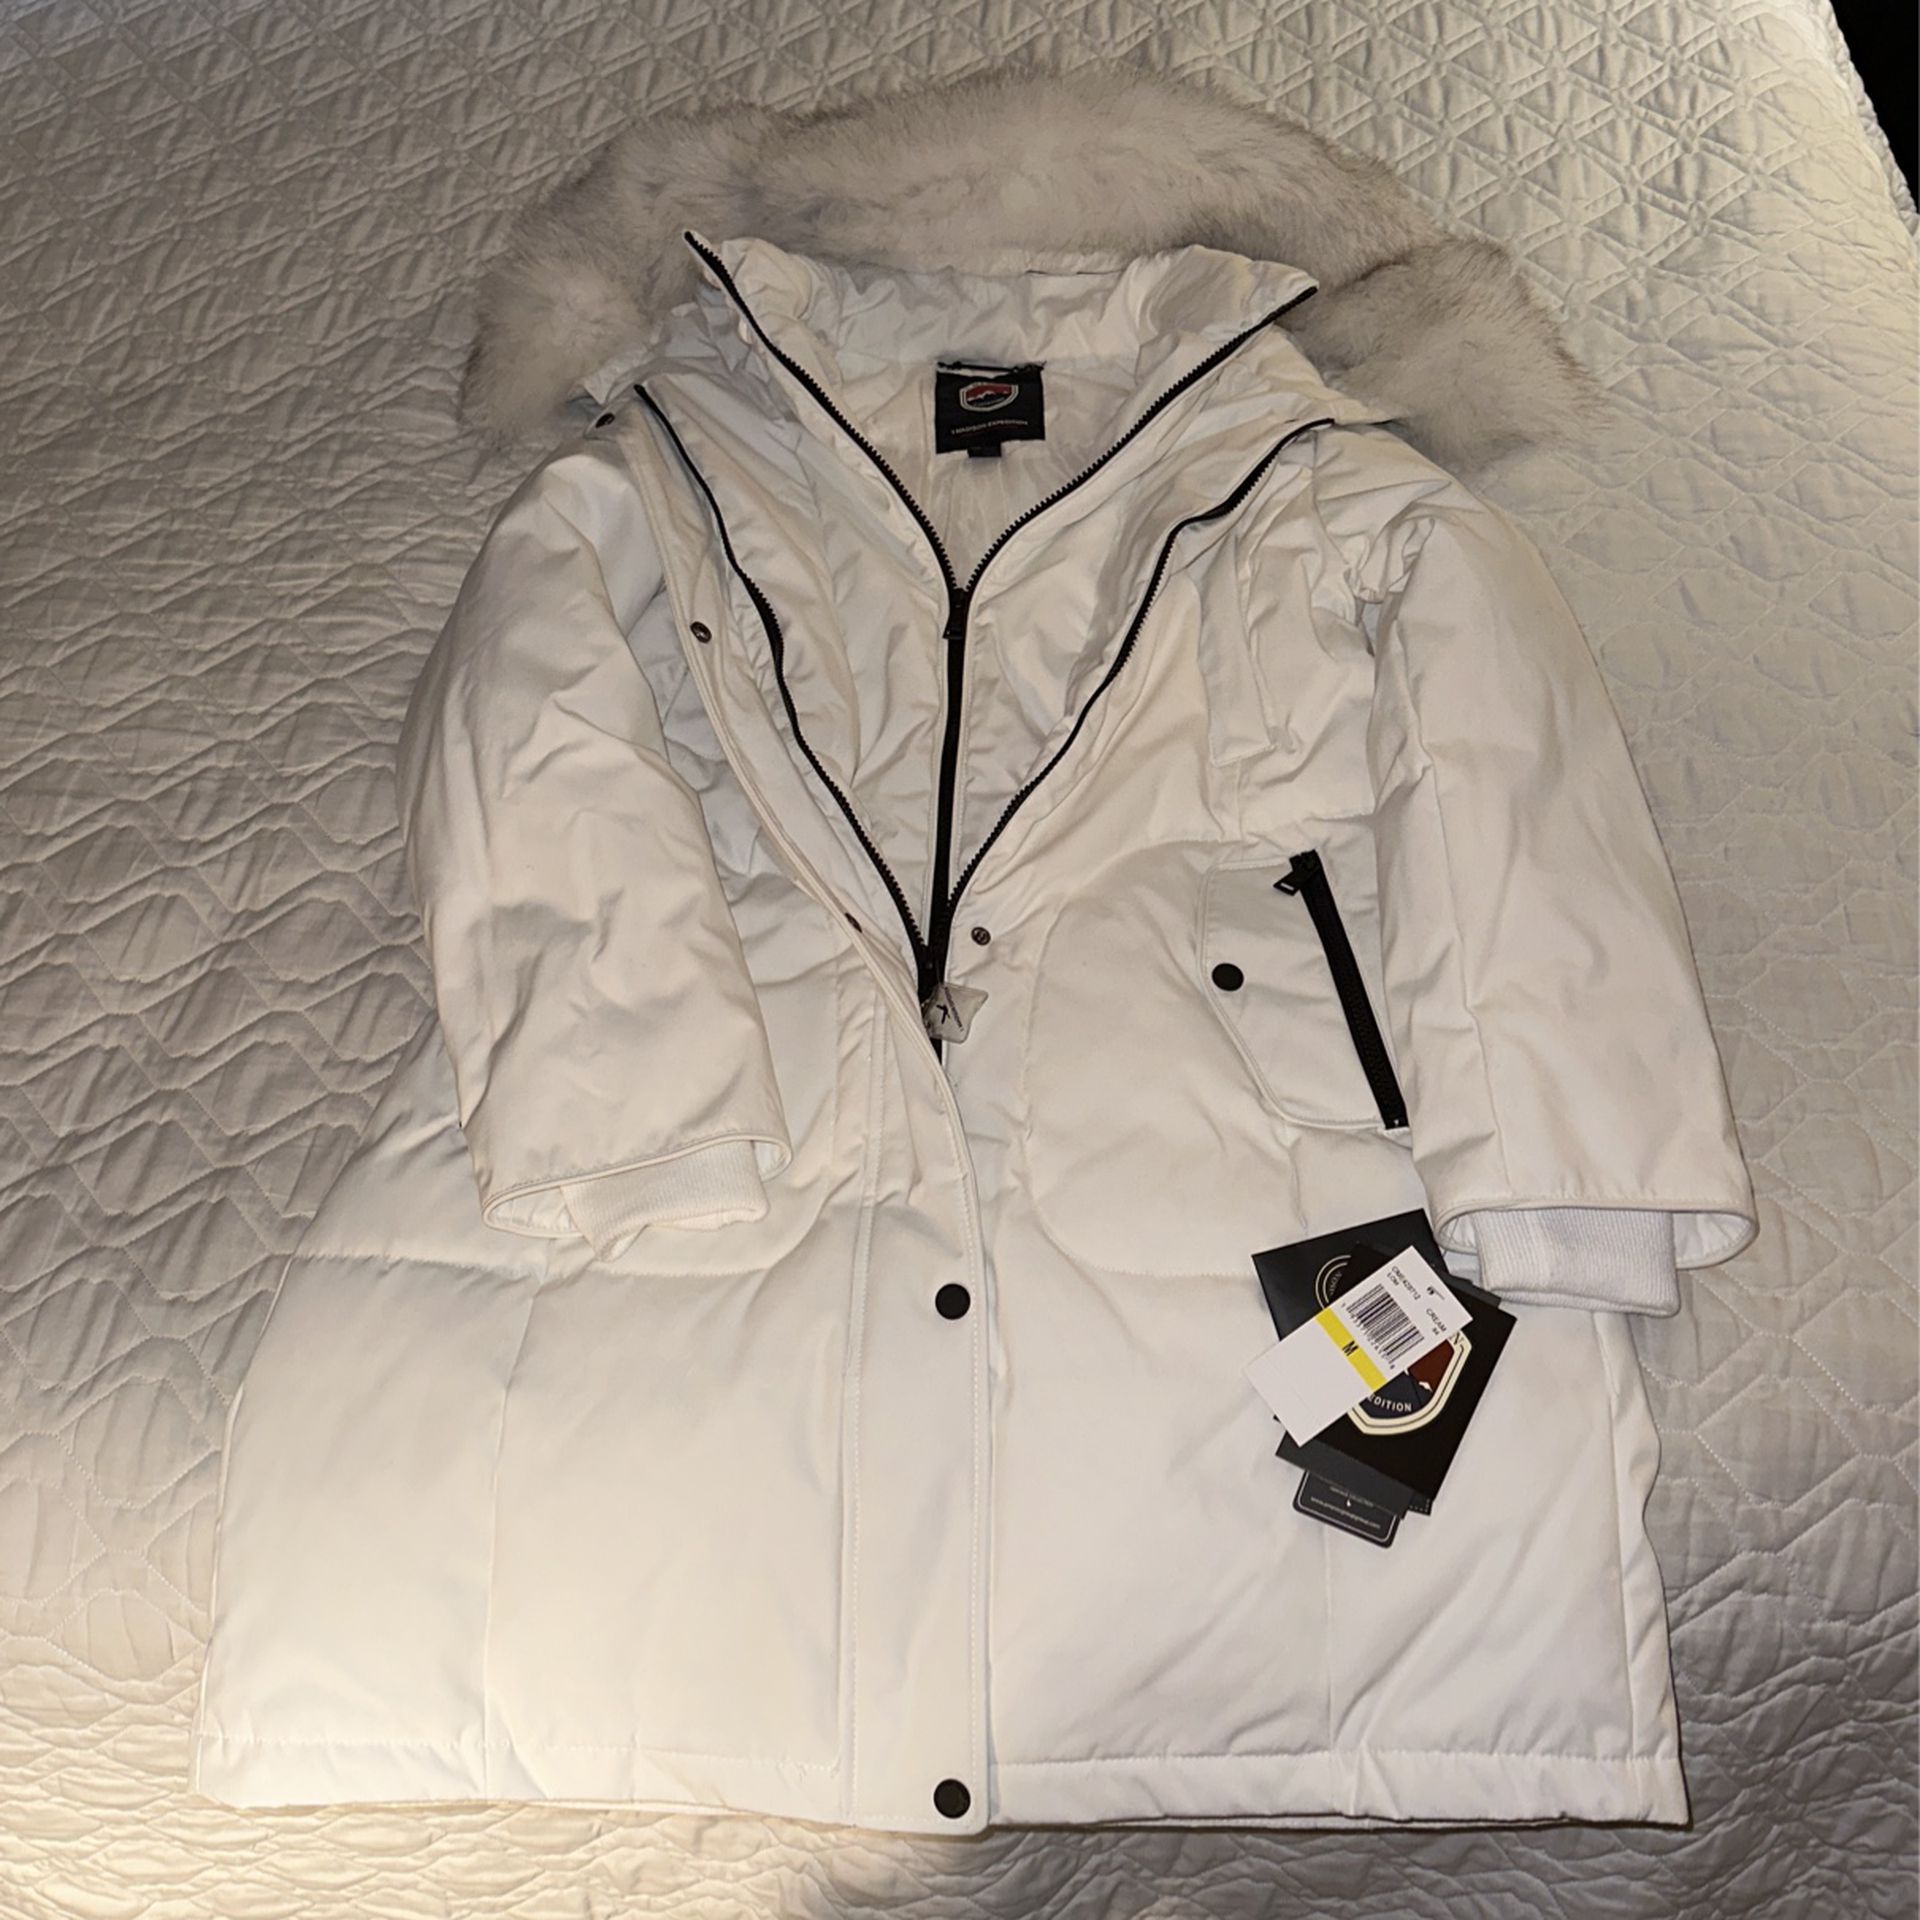 Fur Trim Warm Jacket Coat White